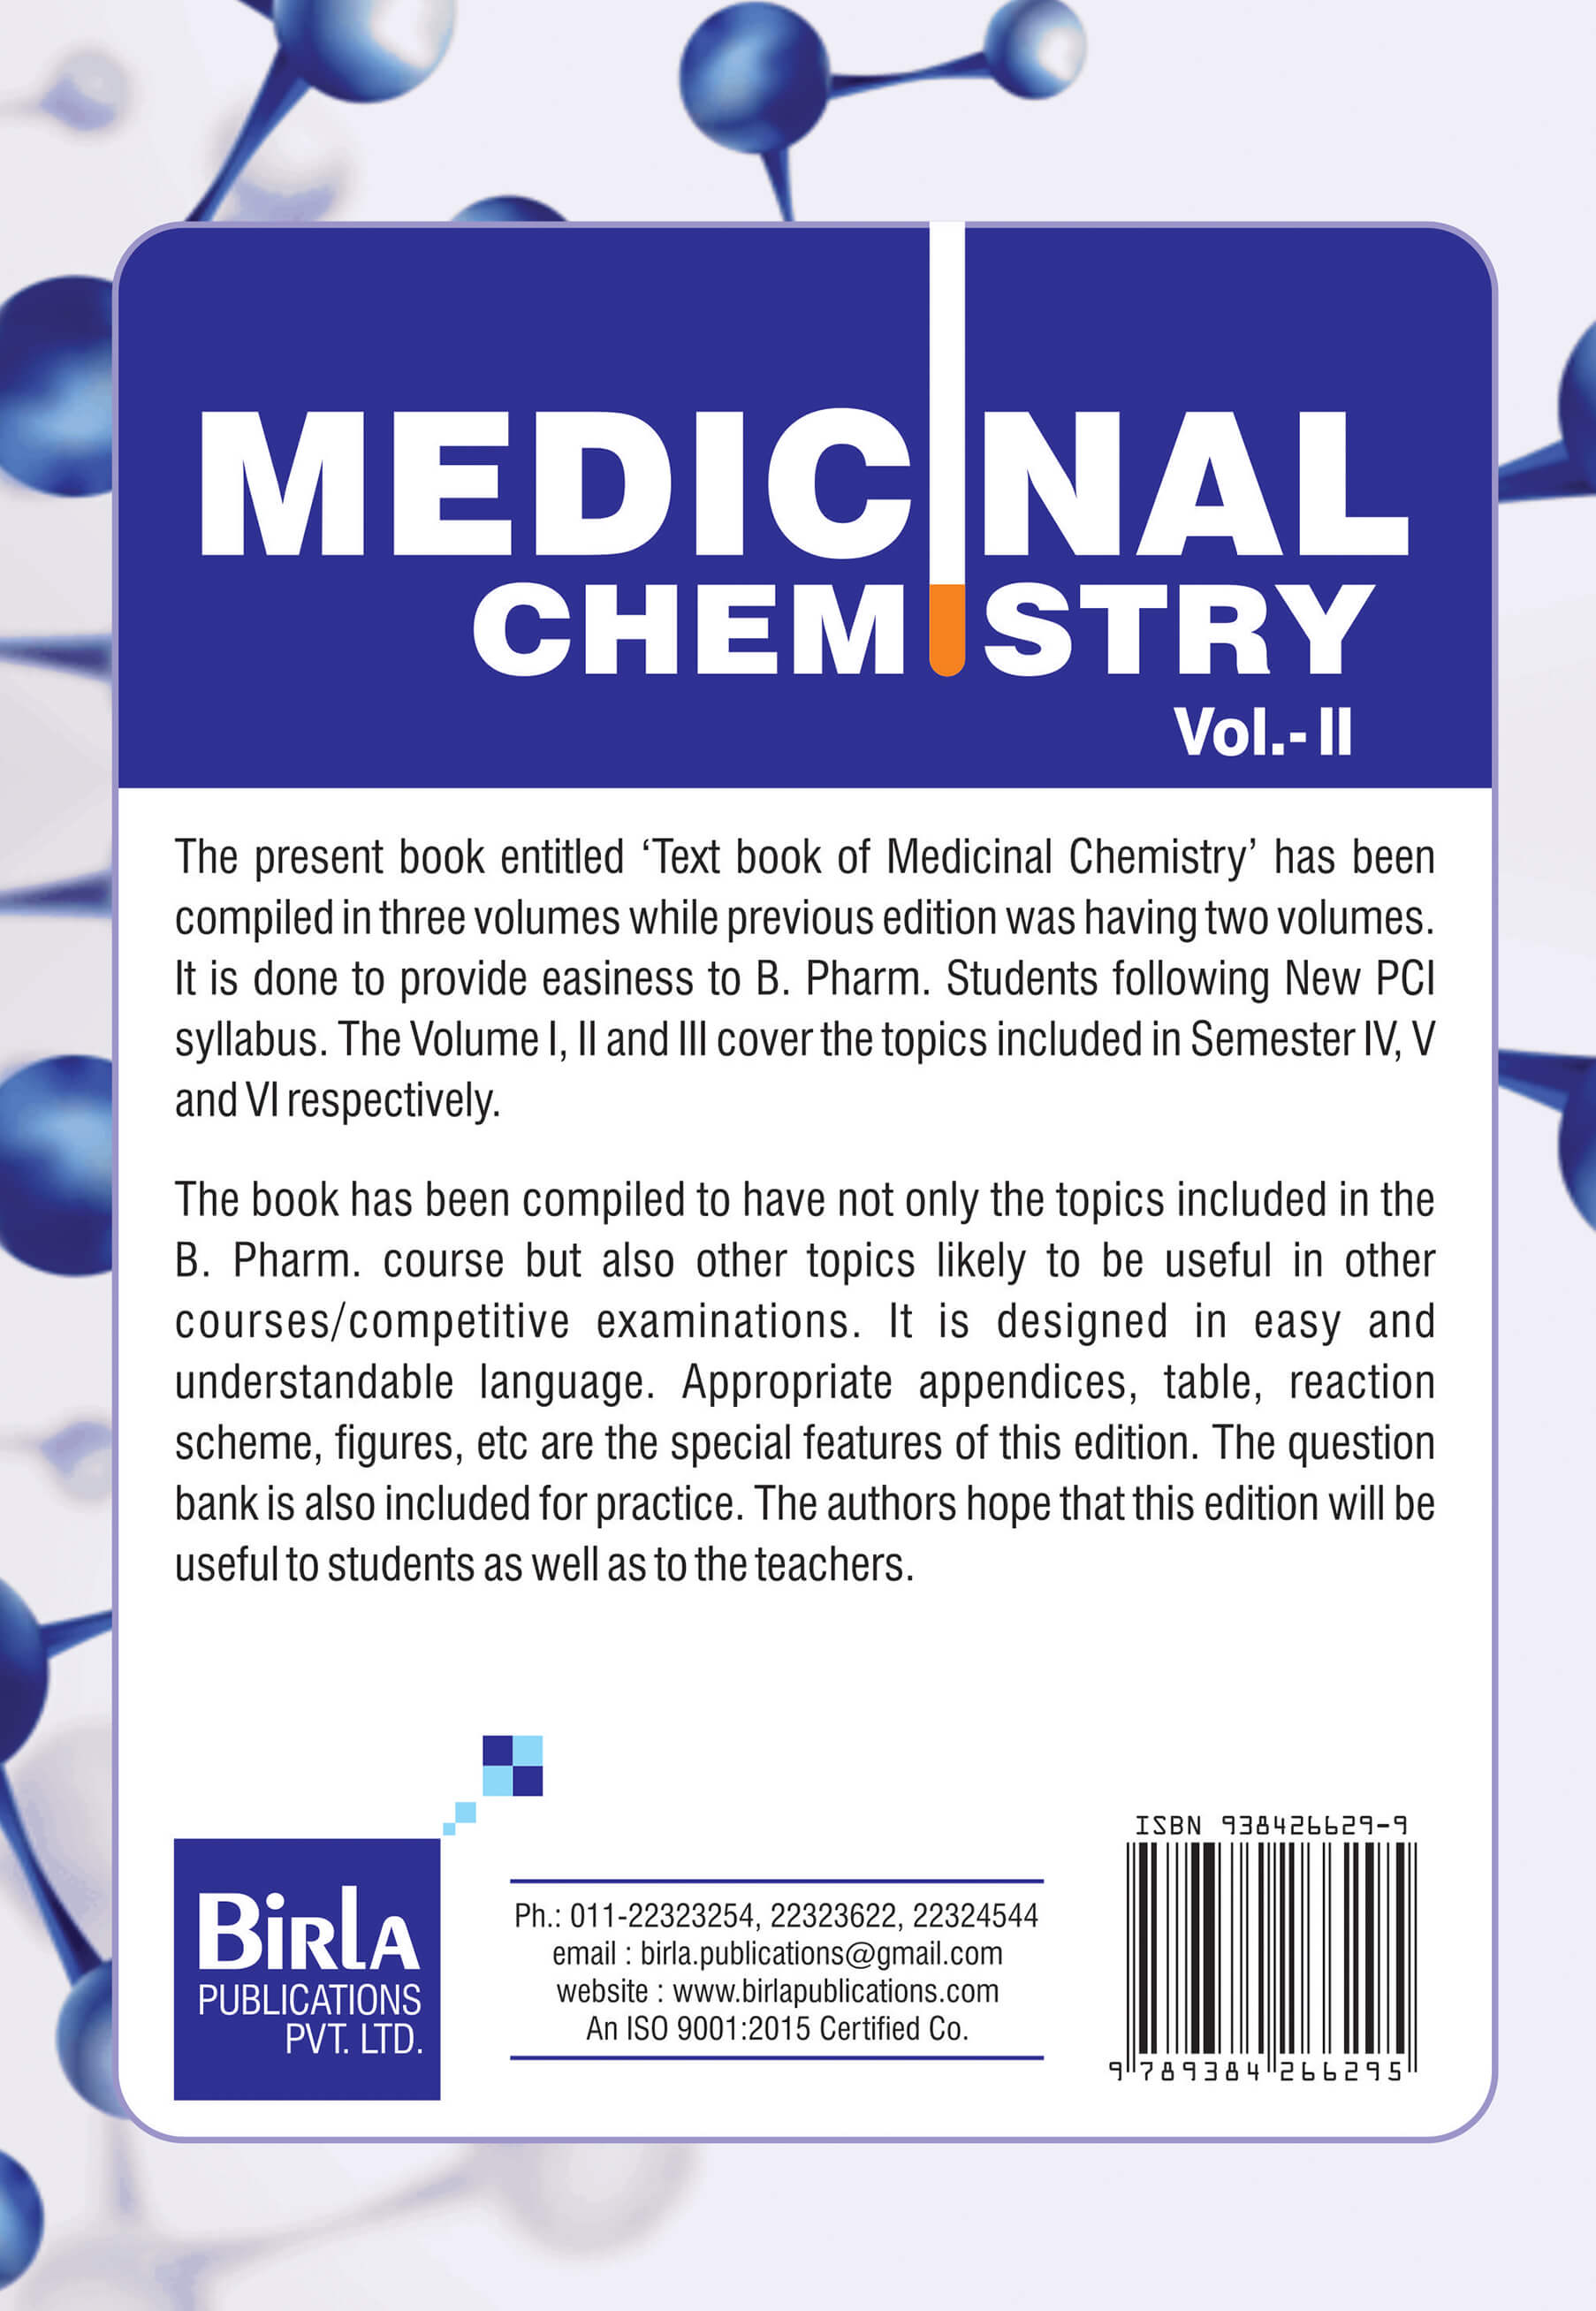 MEDICINAL CHEMISTRY VOL-II